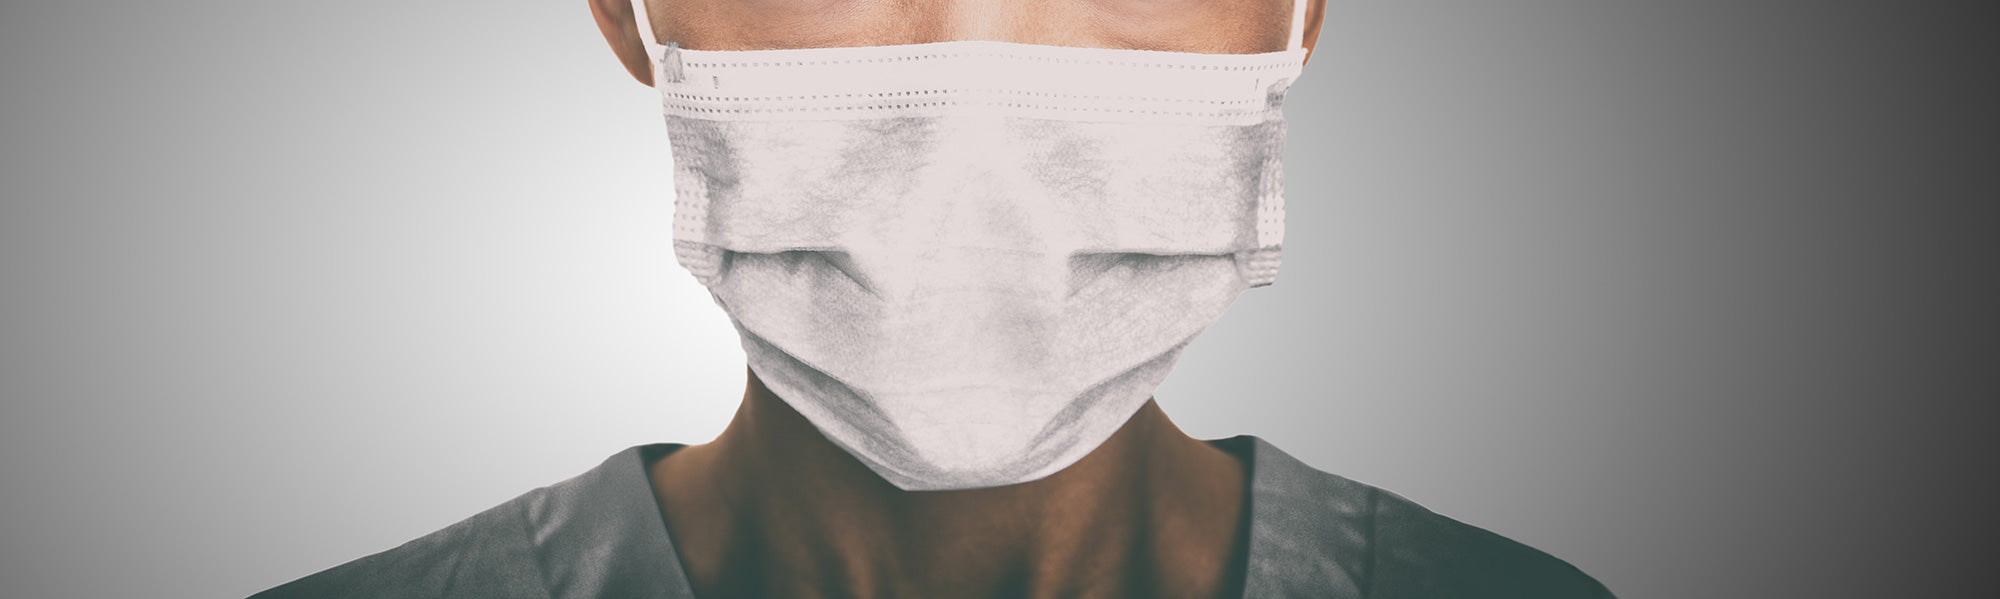 Medical frontliner wearing a surgical mask